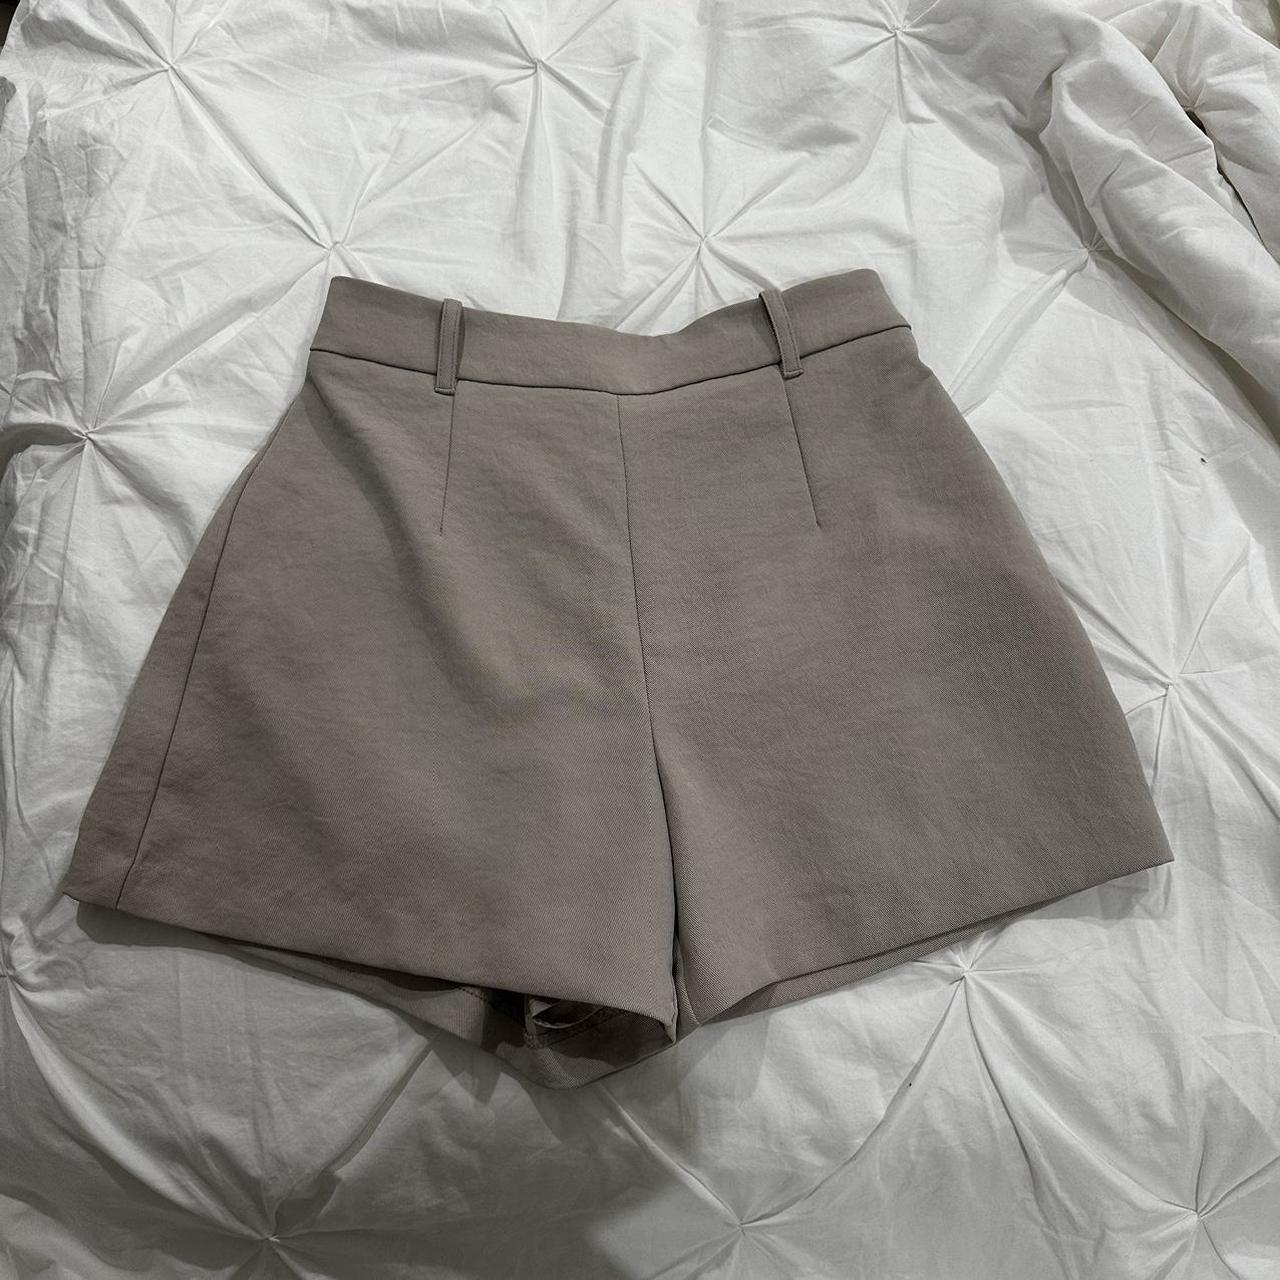 Kookai Ariel shorts in colour burnt butter Size... - Depop